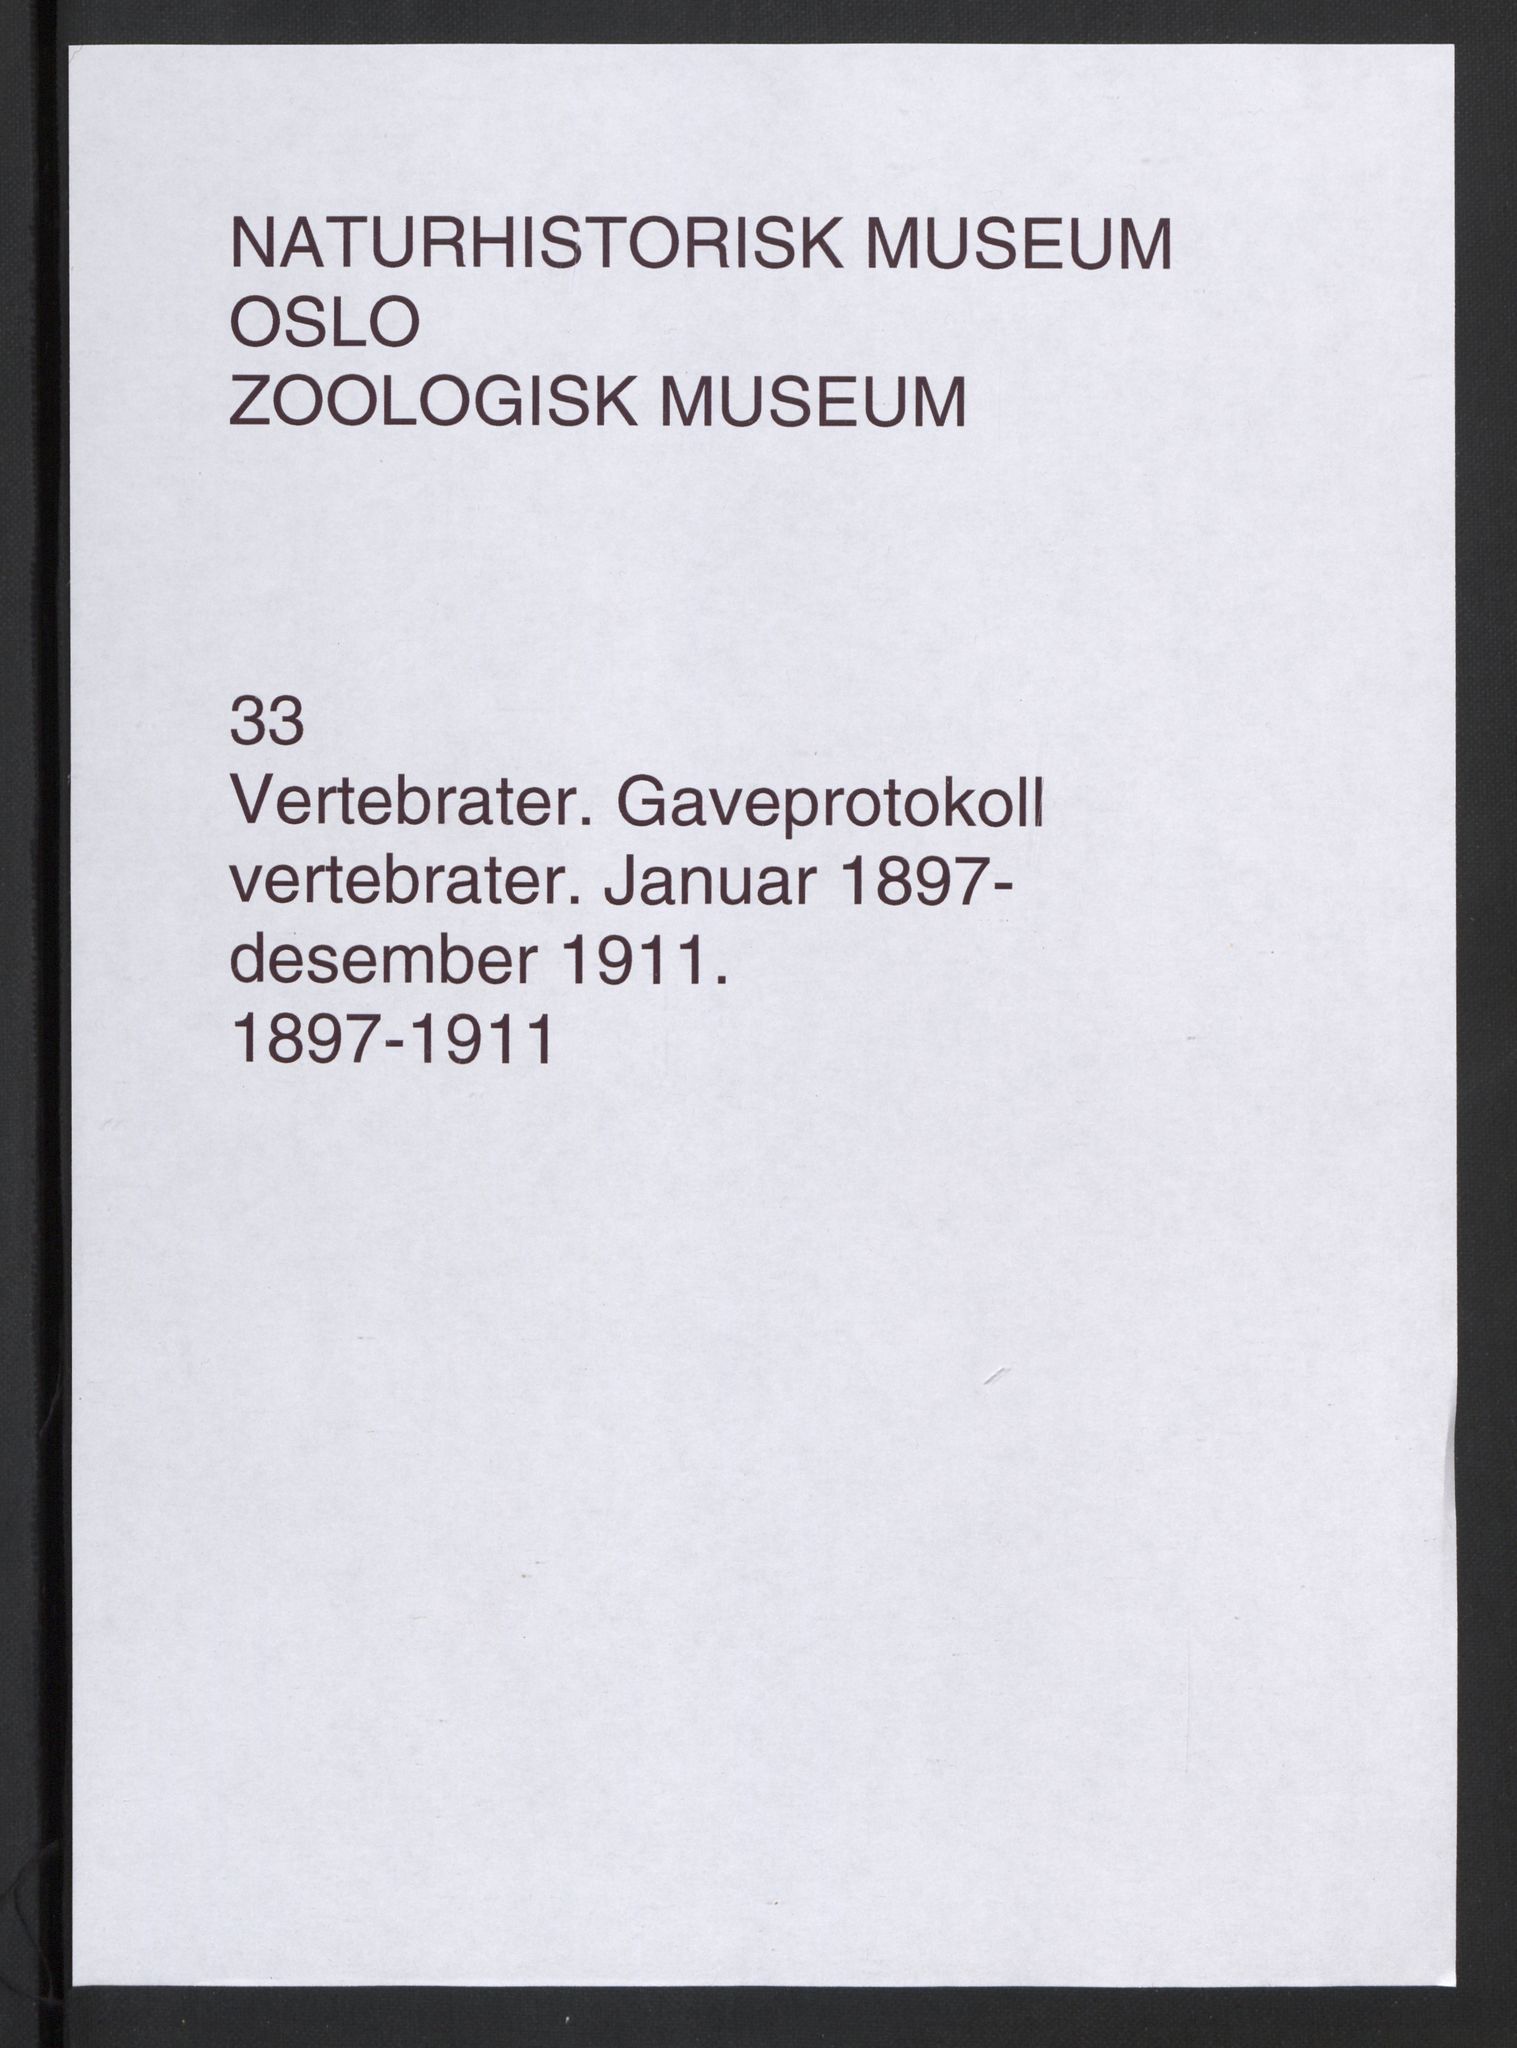 Naturhistorisk museum (Oslo), NHMO/-/5, 1897-1911